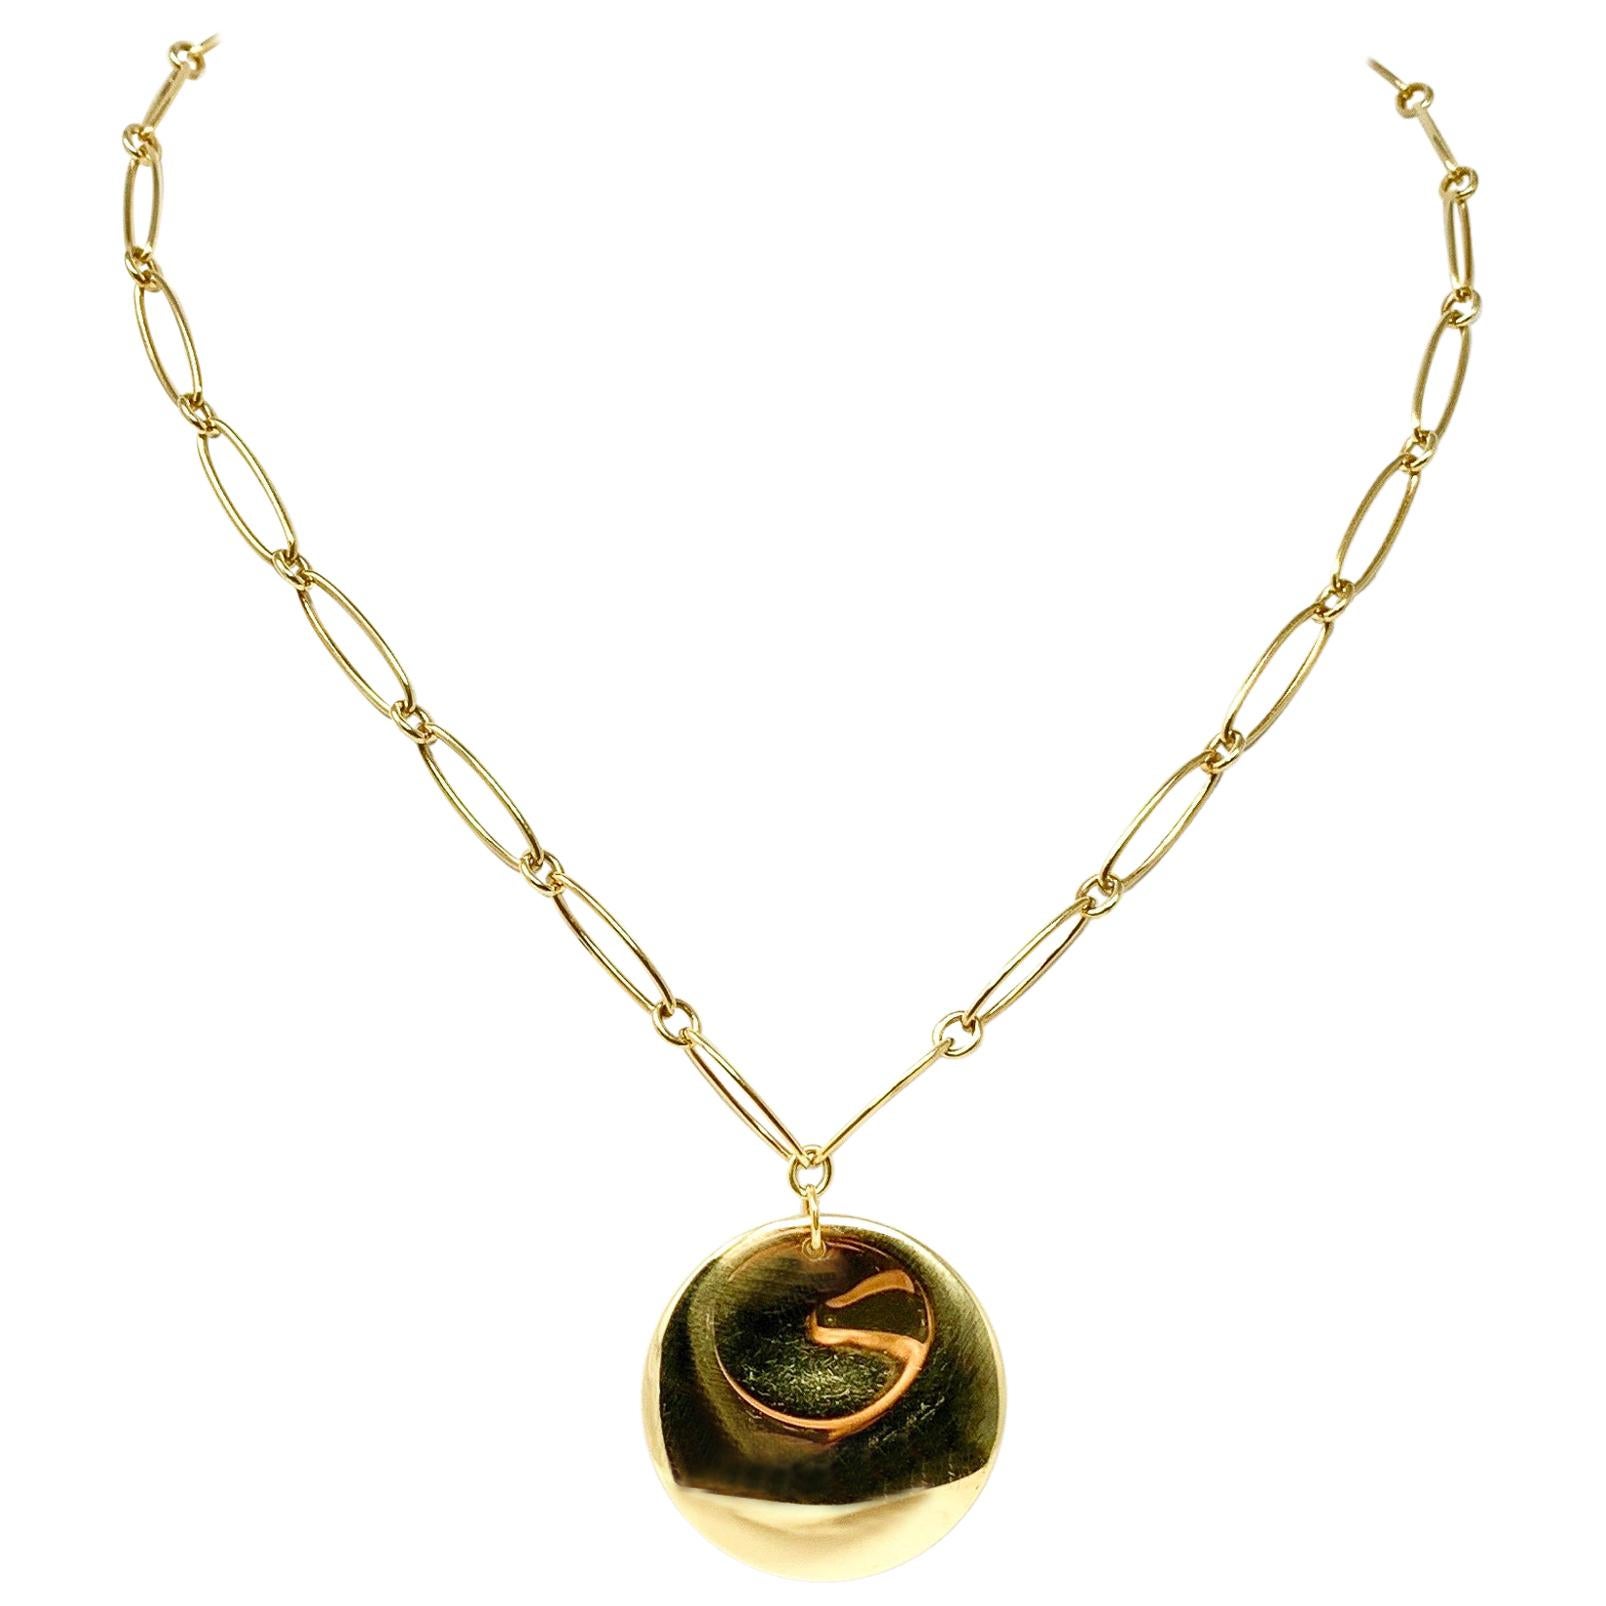 Tiffany & Co. Elsa Peretti 18 Karat Yellow Gold Round Pendant Necklace